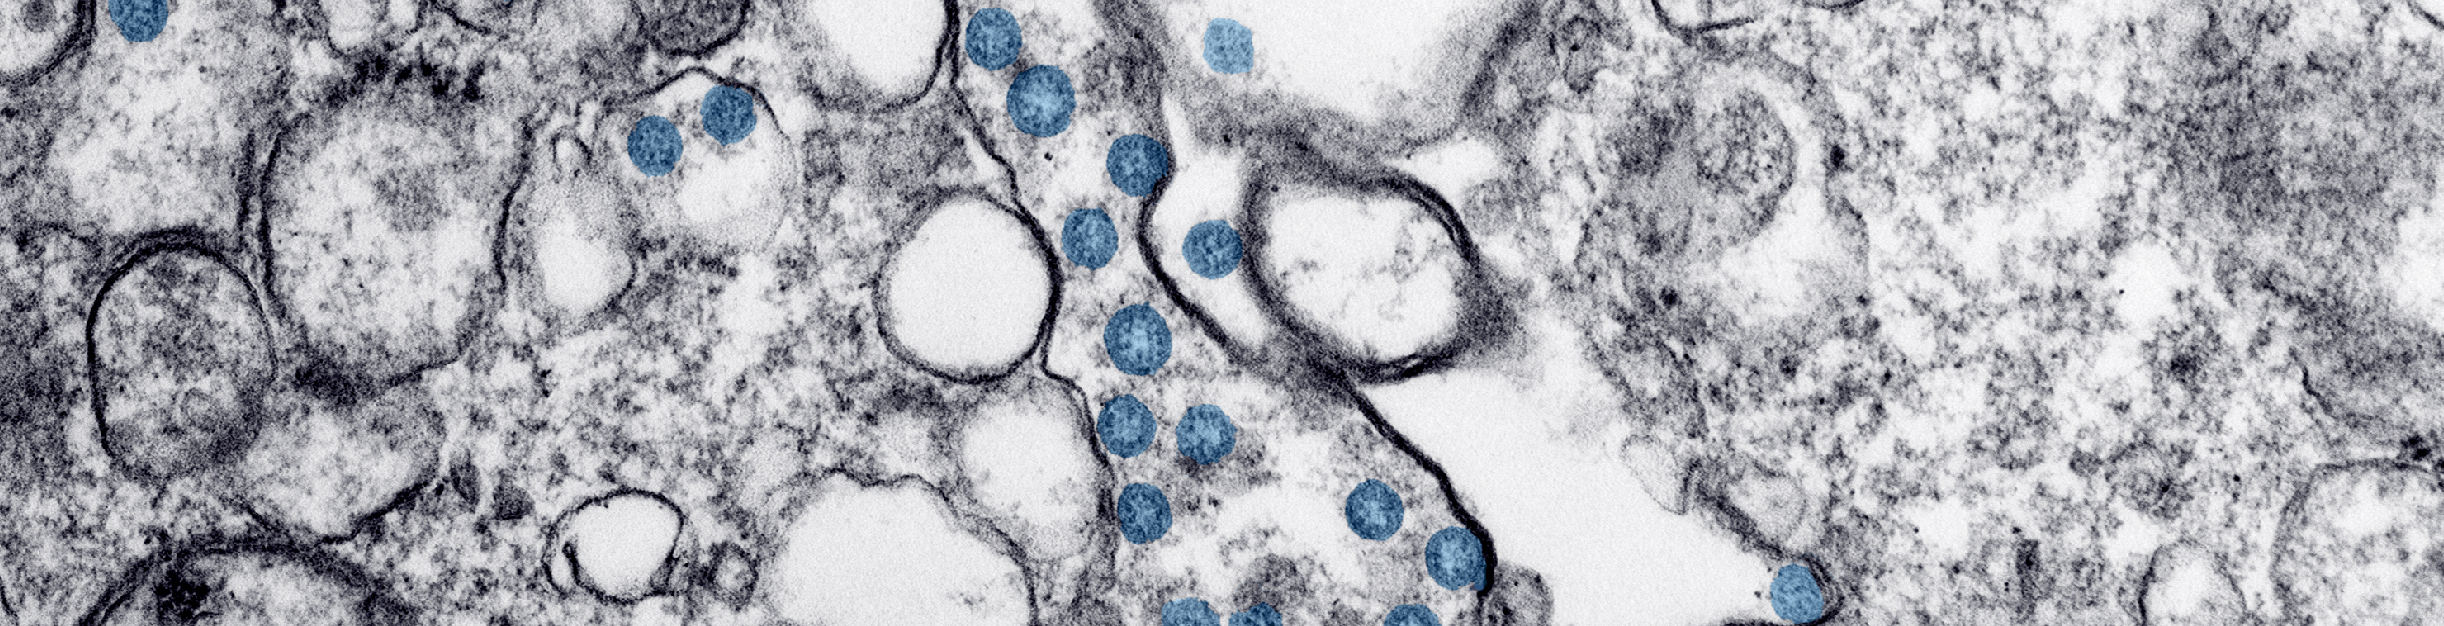 microscopic image of the SARS-CoV19 virus.